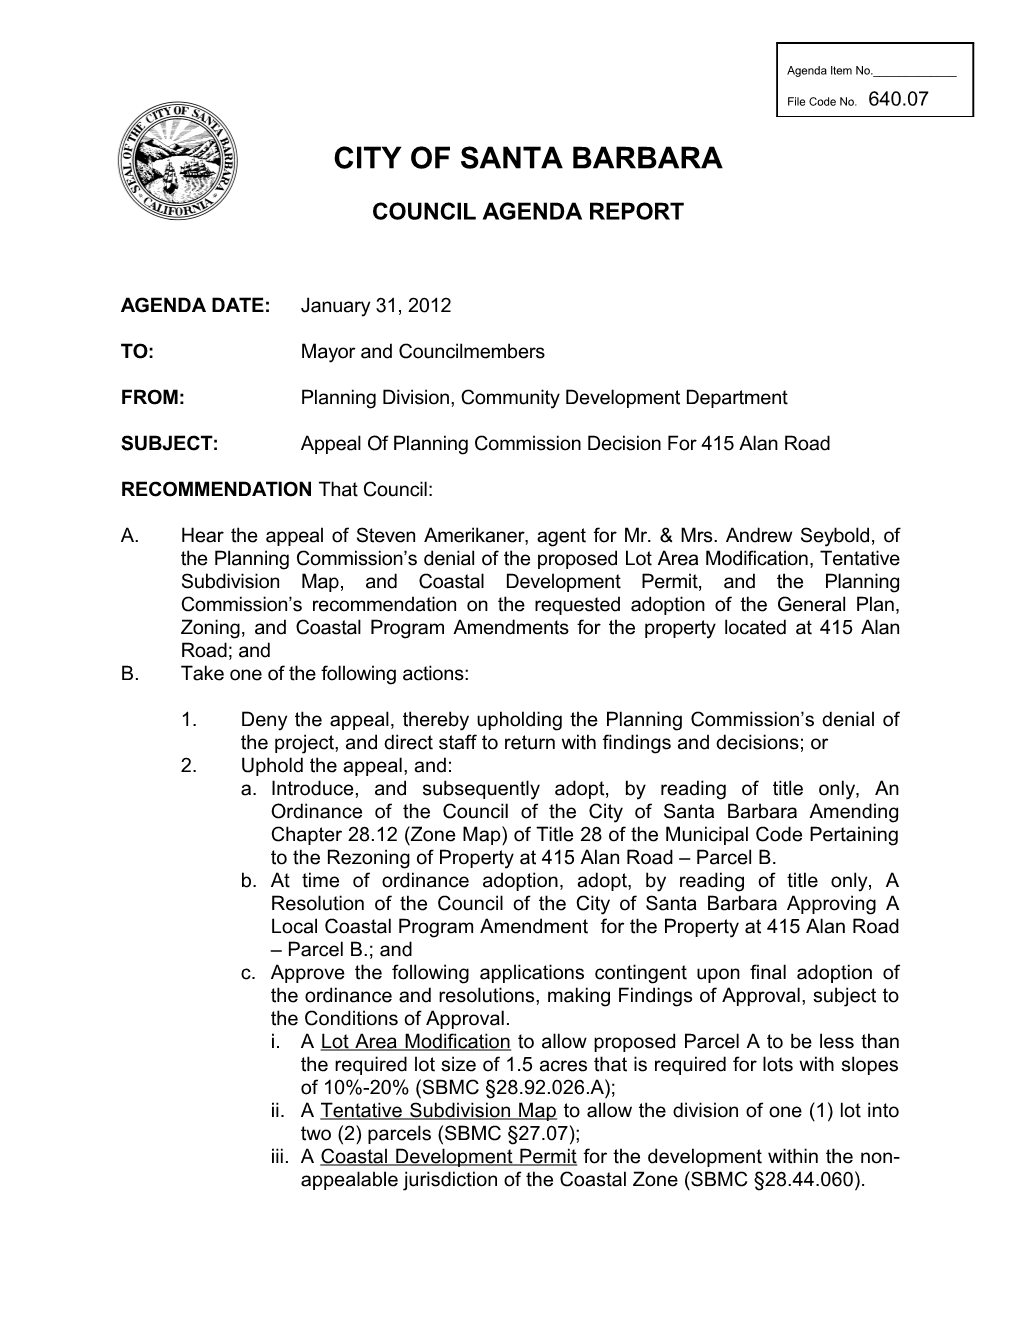 CITY of SANTA BARBARA Council Agenda Report Template